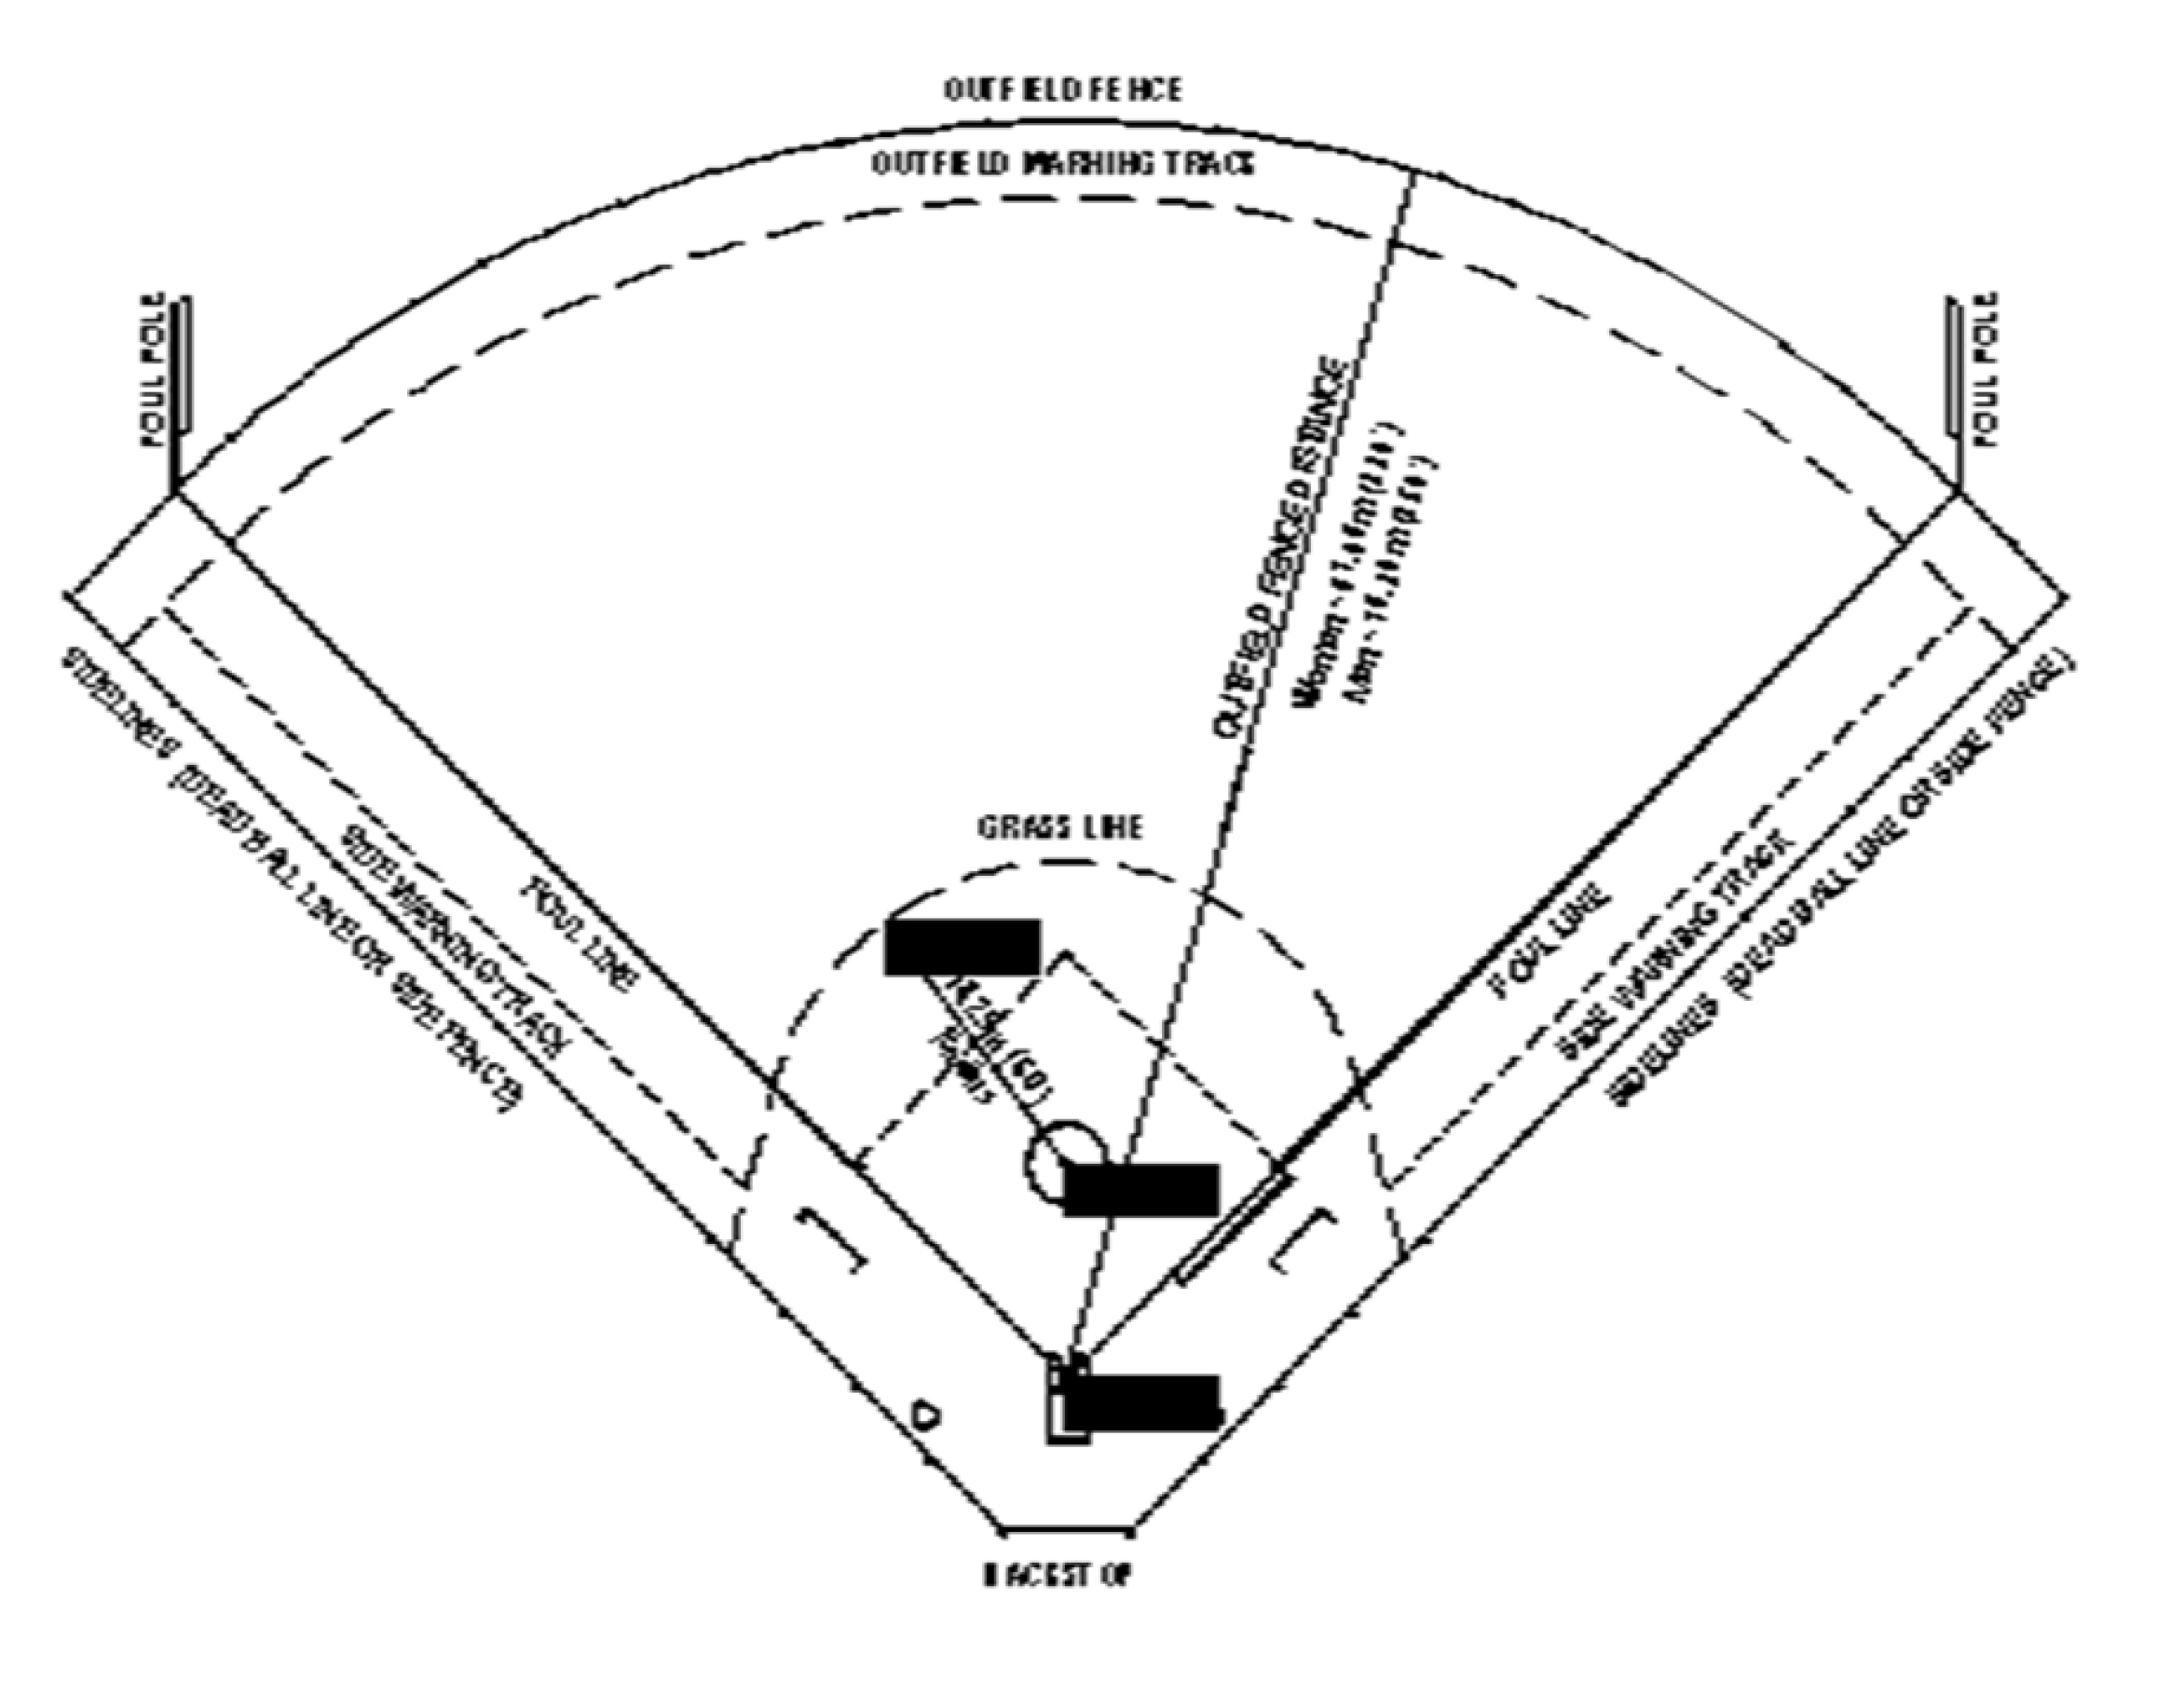 baseball diamond dimensions